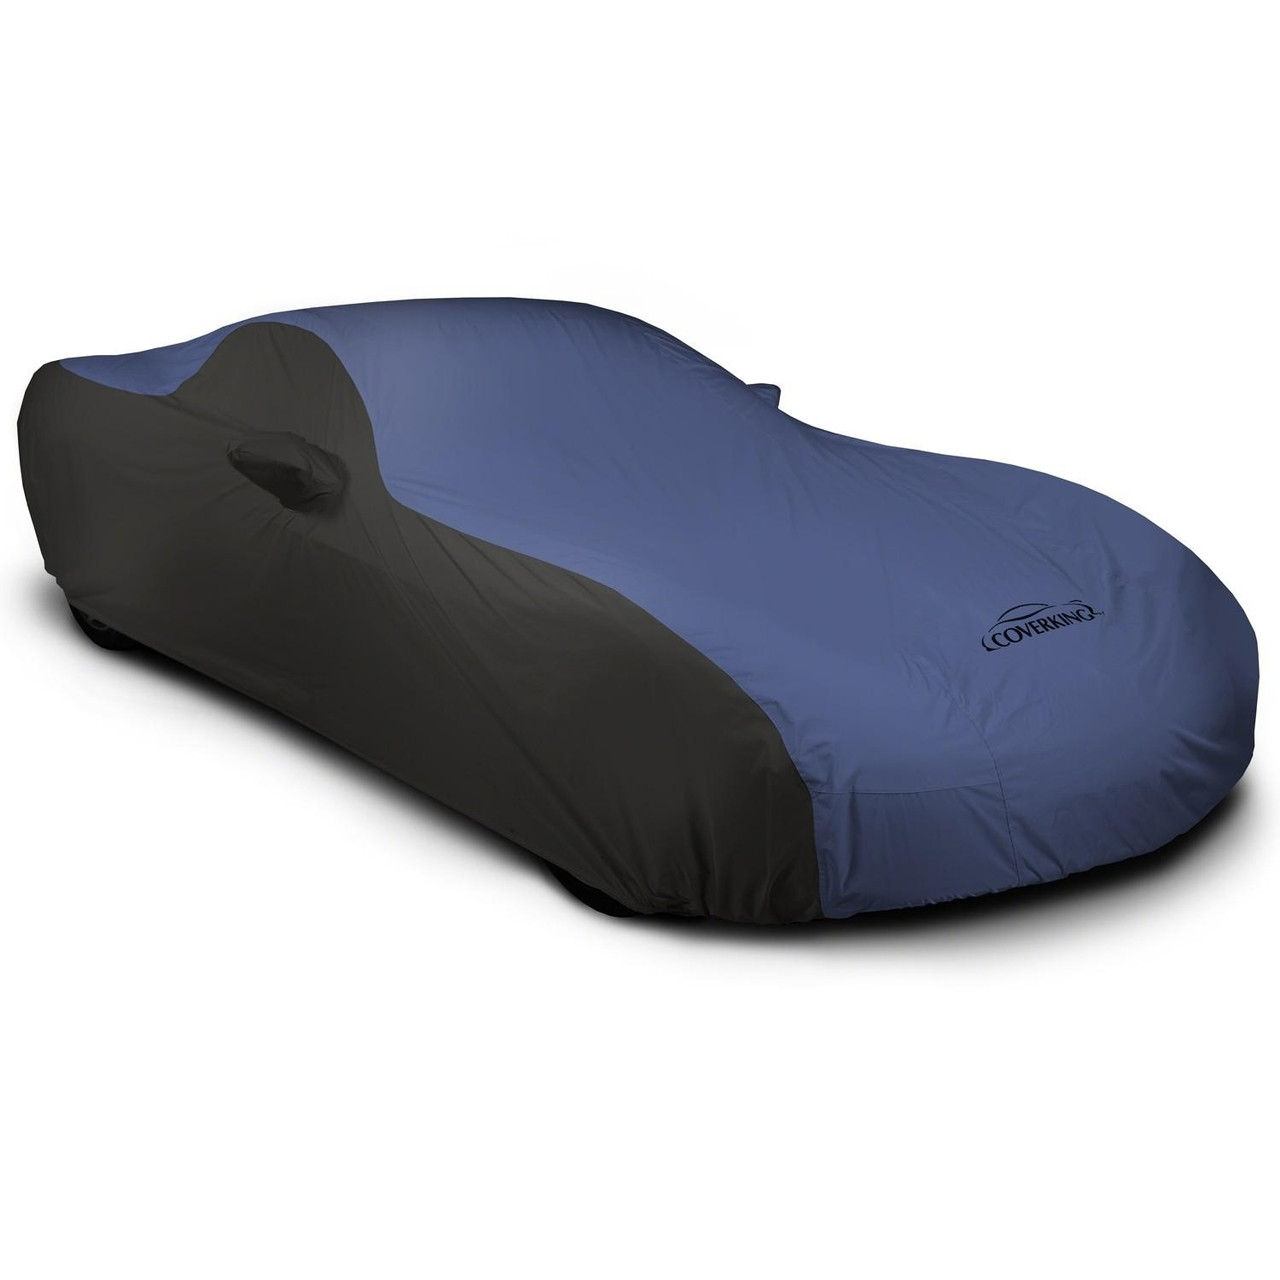 Corvette Outdoor Car Cover - Black/Blue